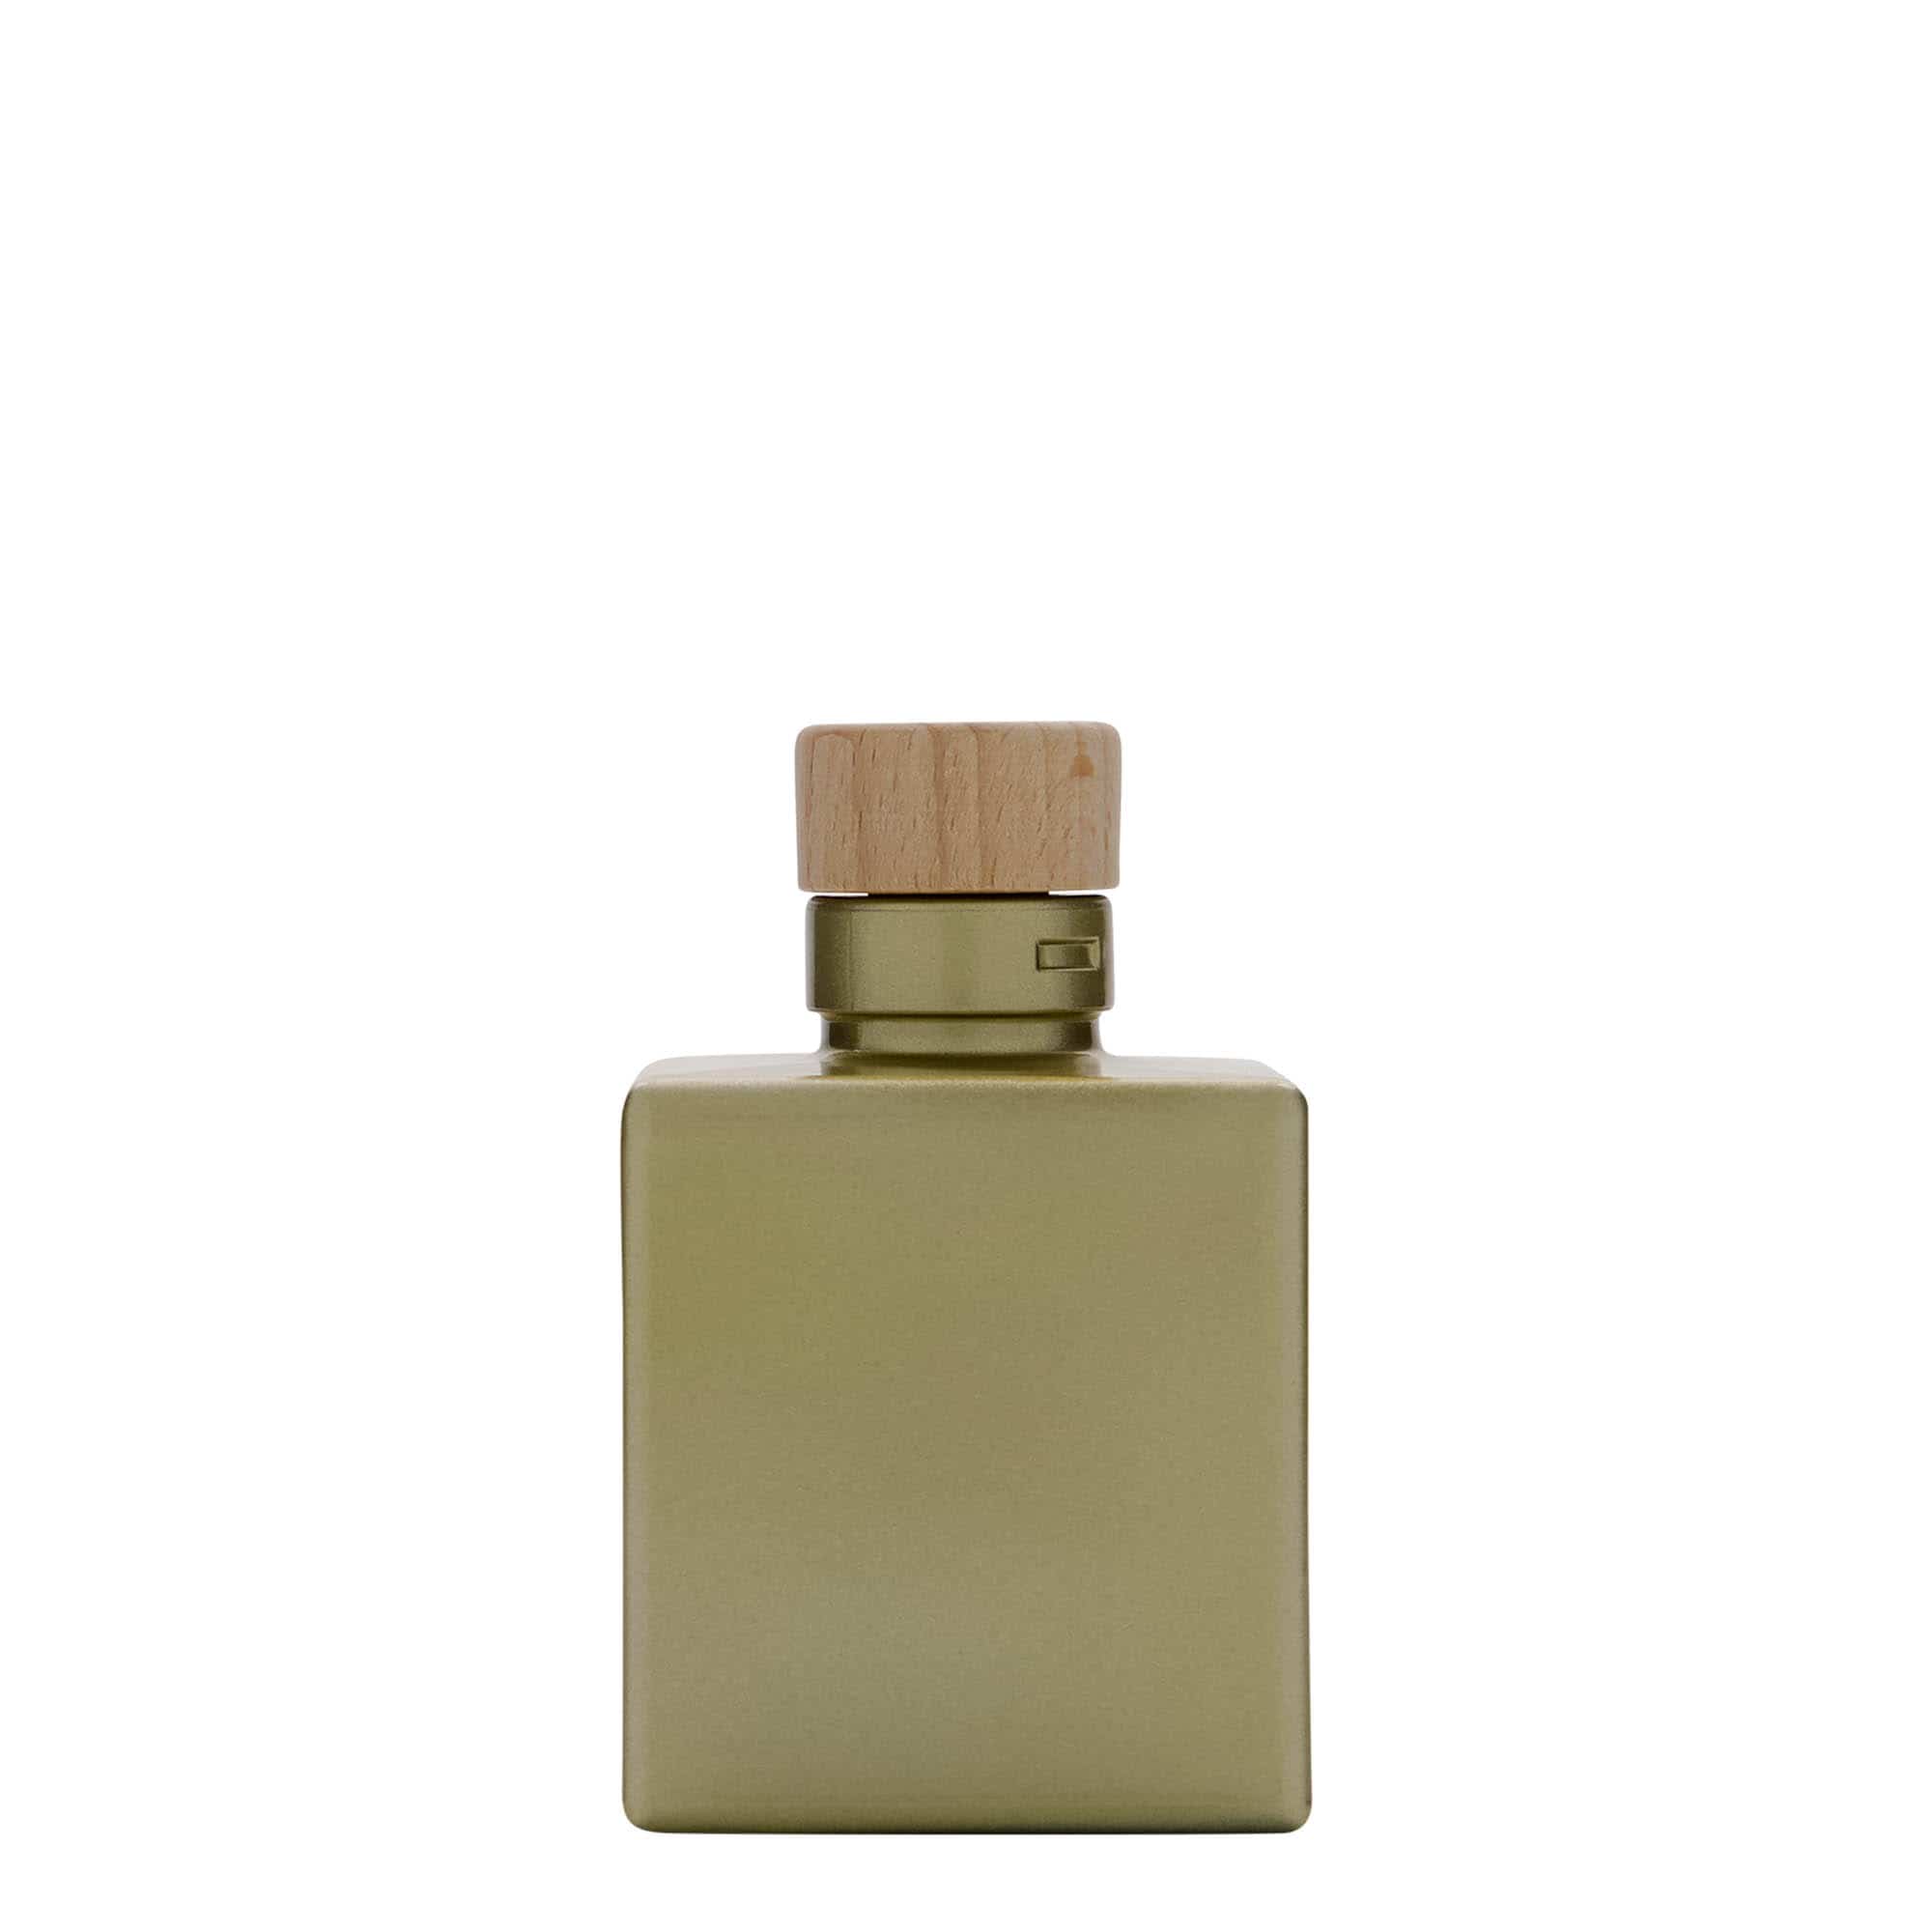 100 ml glass bottle 'Cube', square, gold, closure: cork